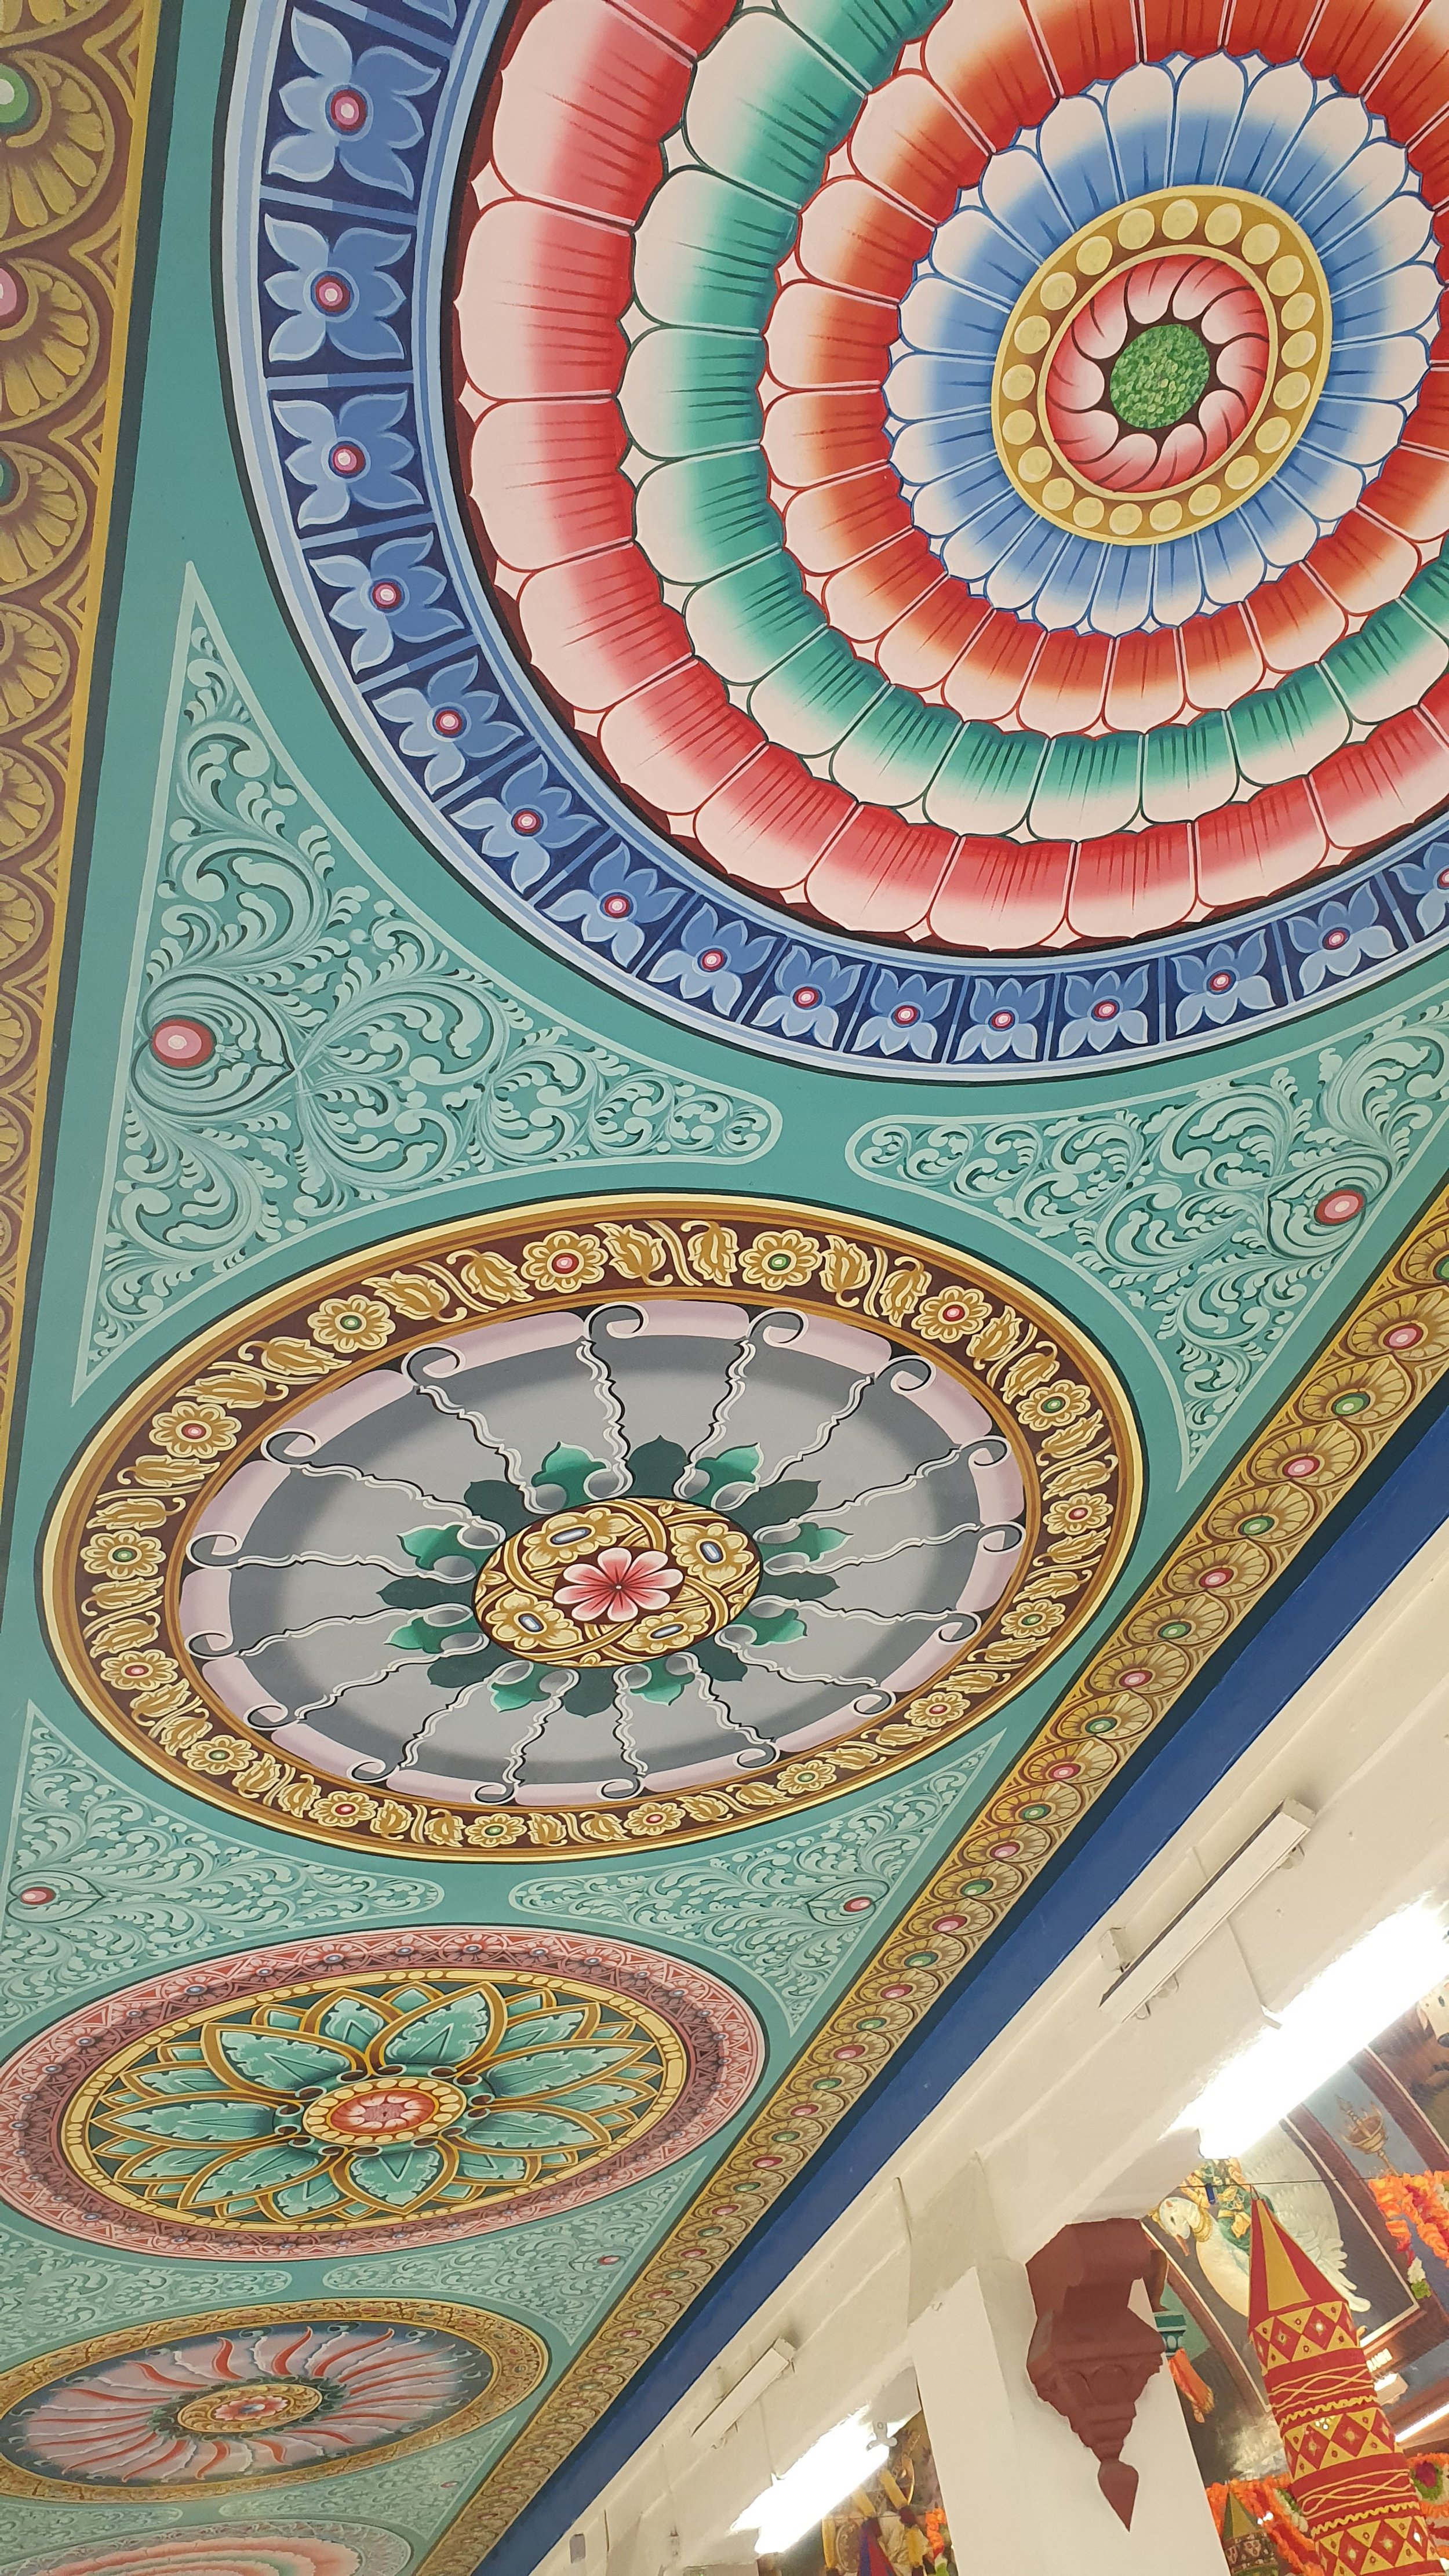  Beautiful Hindu art on the ceiling.   